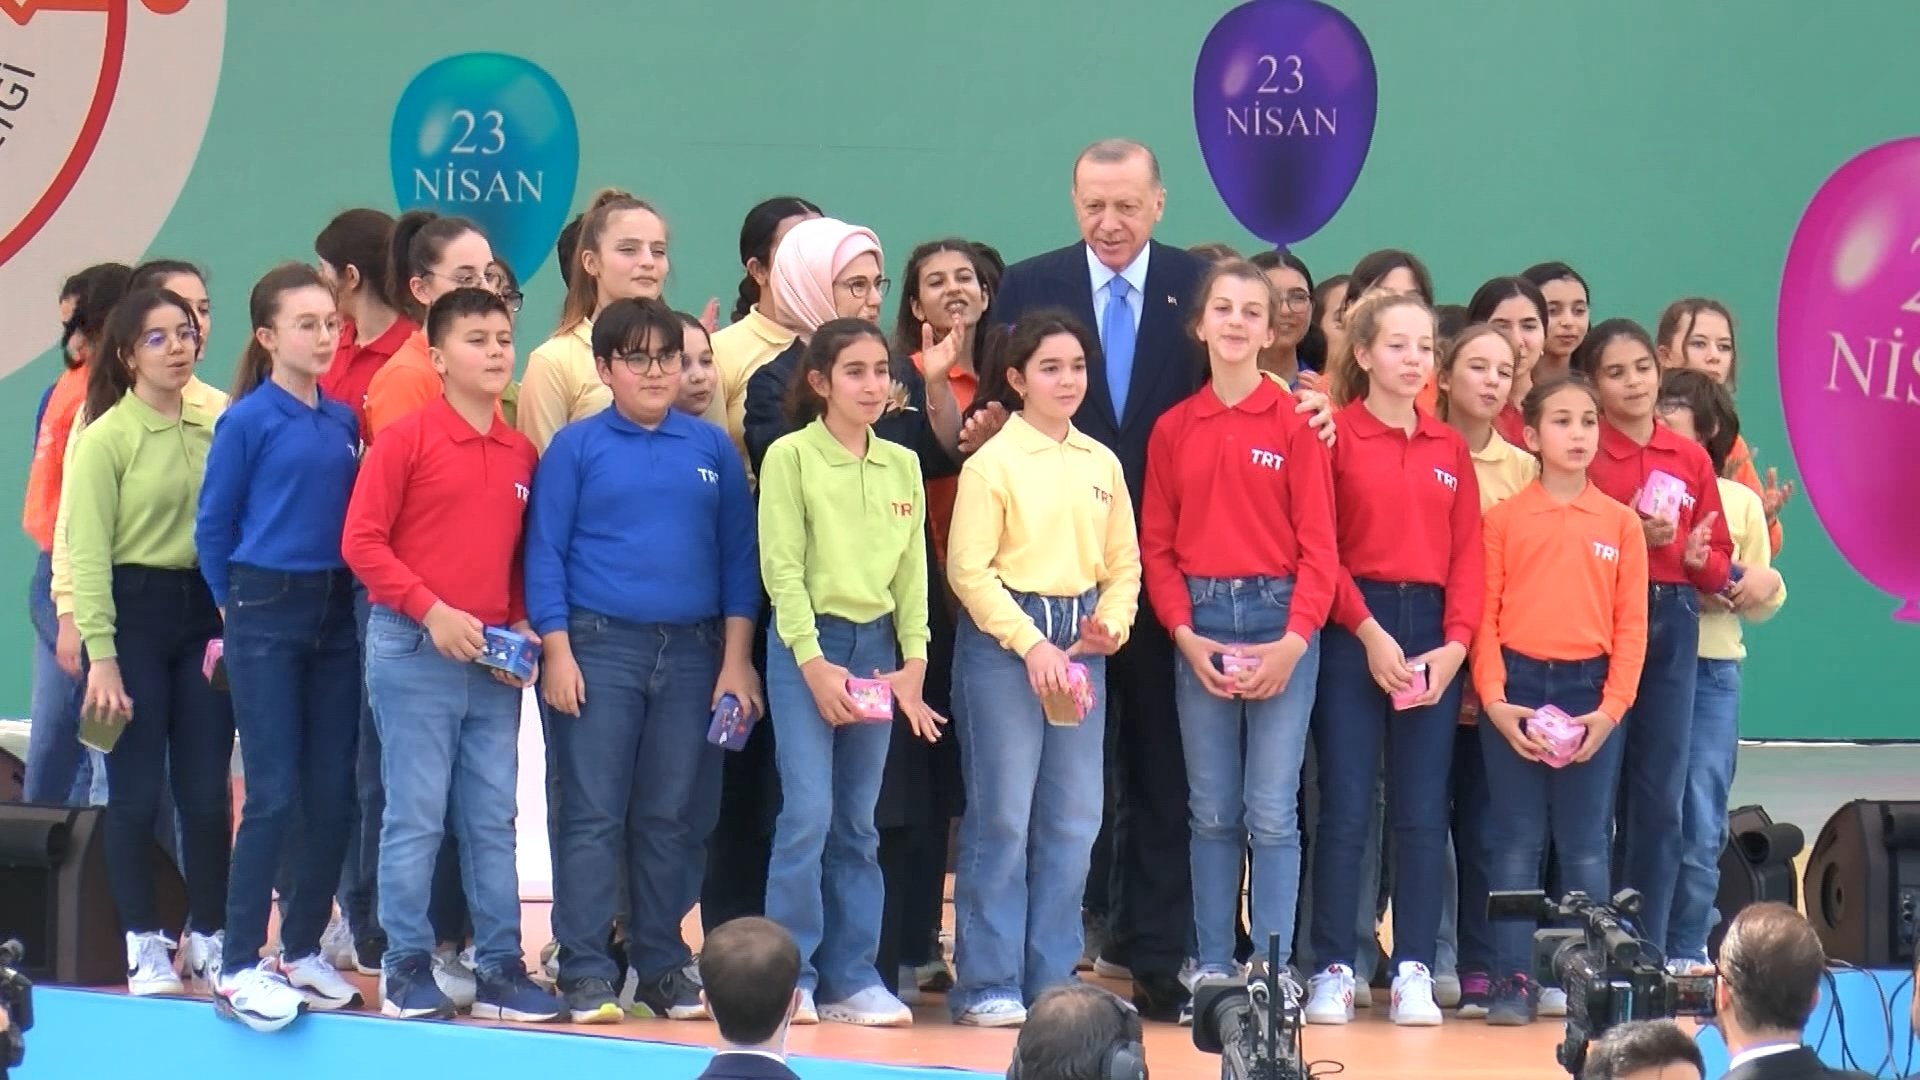 The President of Turkey Recep Tayyip Erdoğan and her wife Emine Erdoğan at the TRT 23 April Children's Festival, Başakşehir, Istanbul, Turkey, April 23, 2022. (DHA Photo)